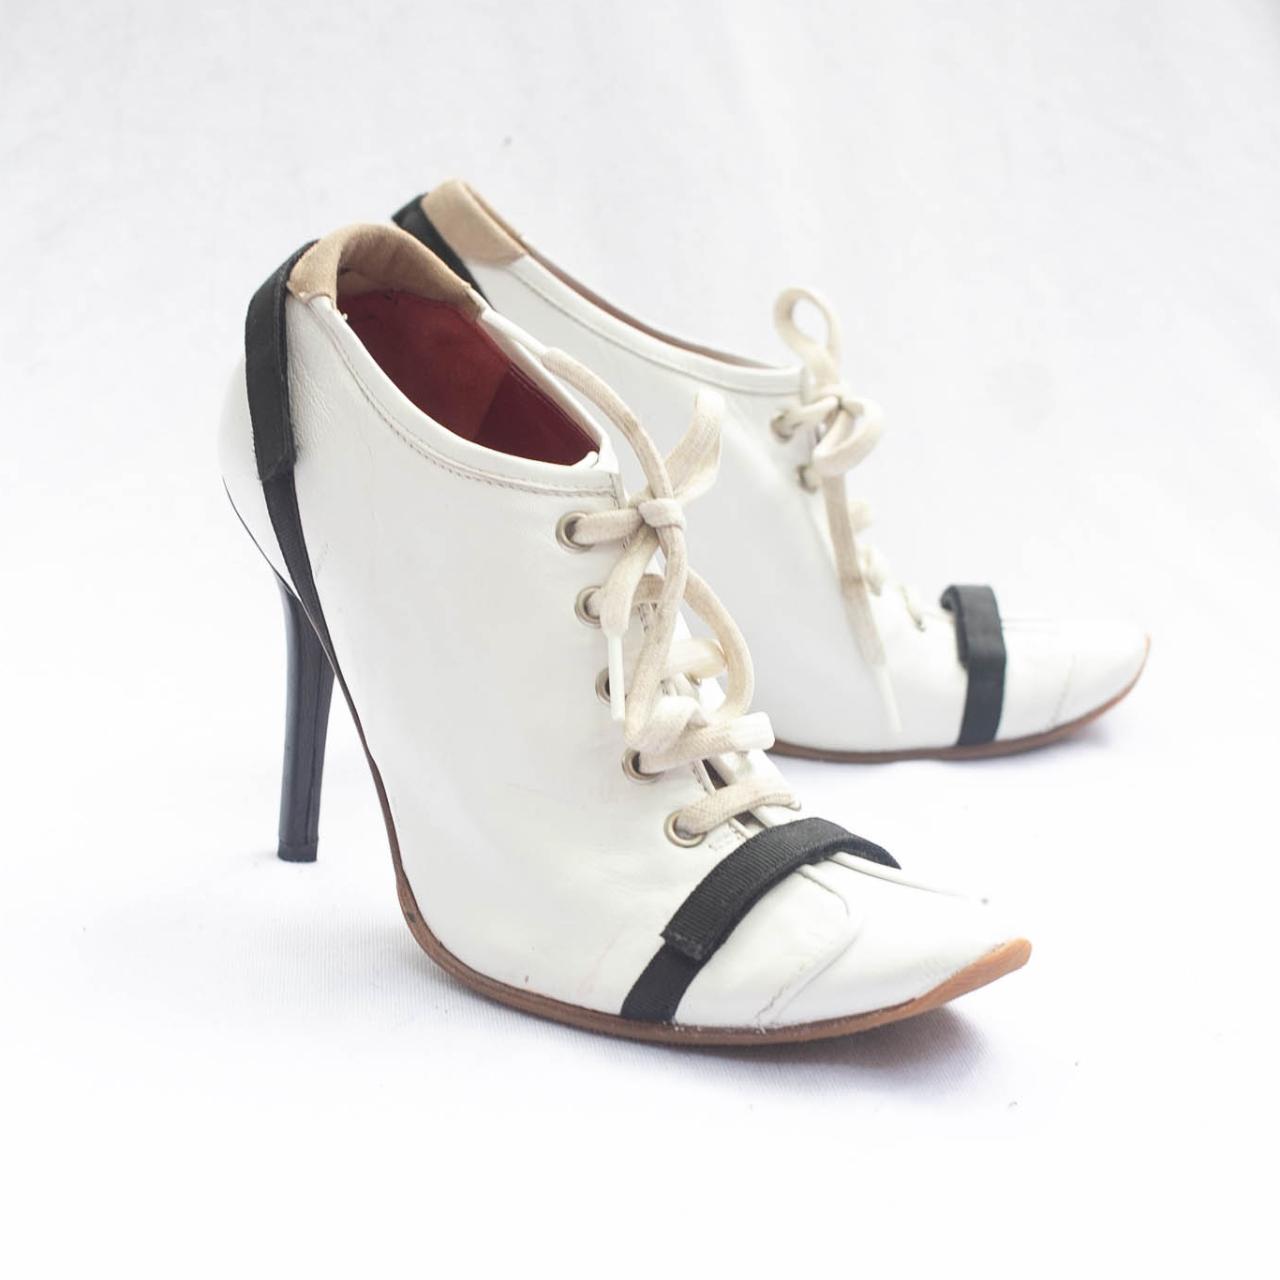 Gianfranco Ferre leather heels. These are floor - Depop